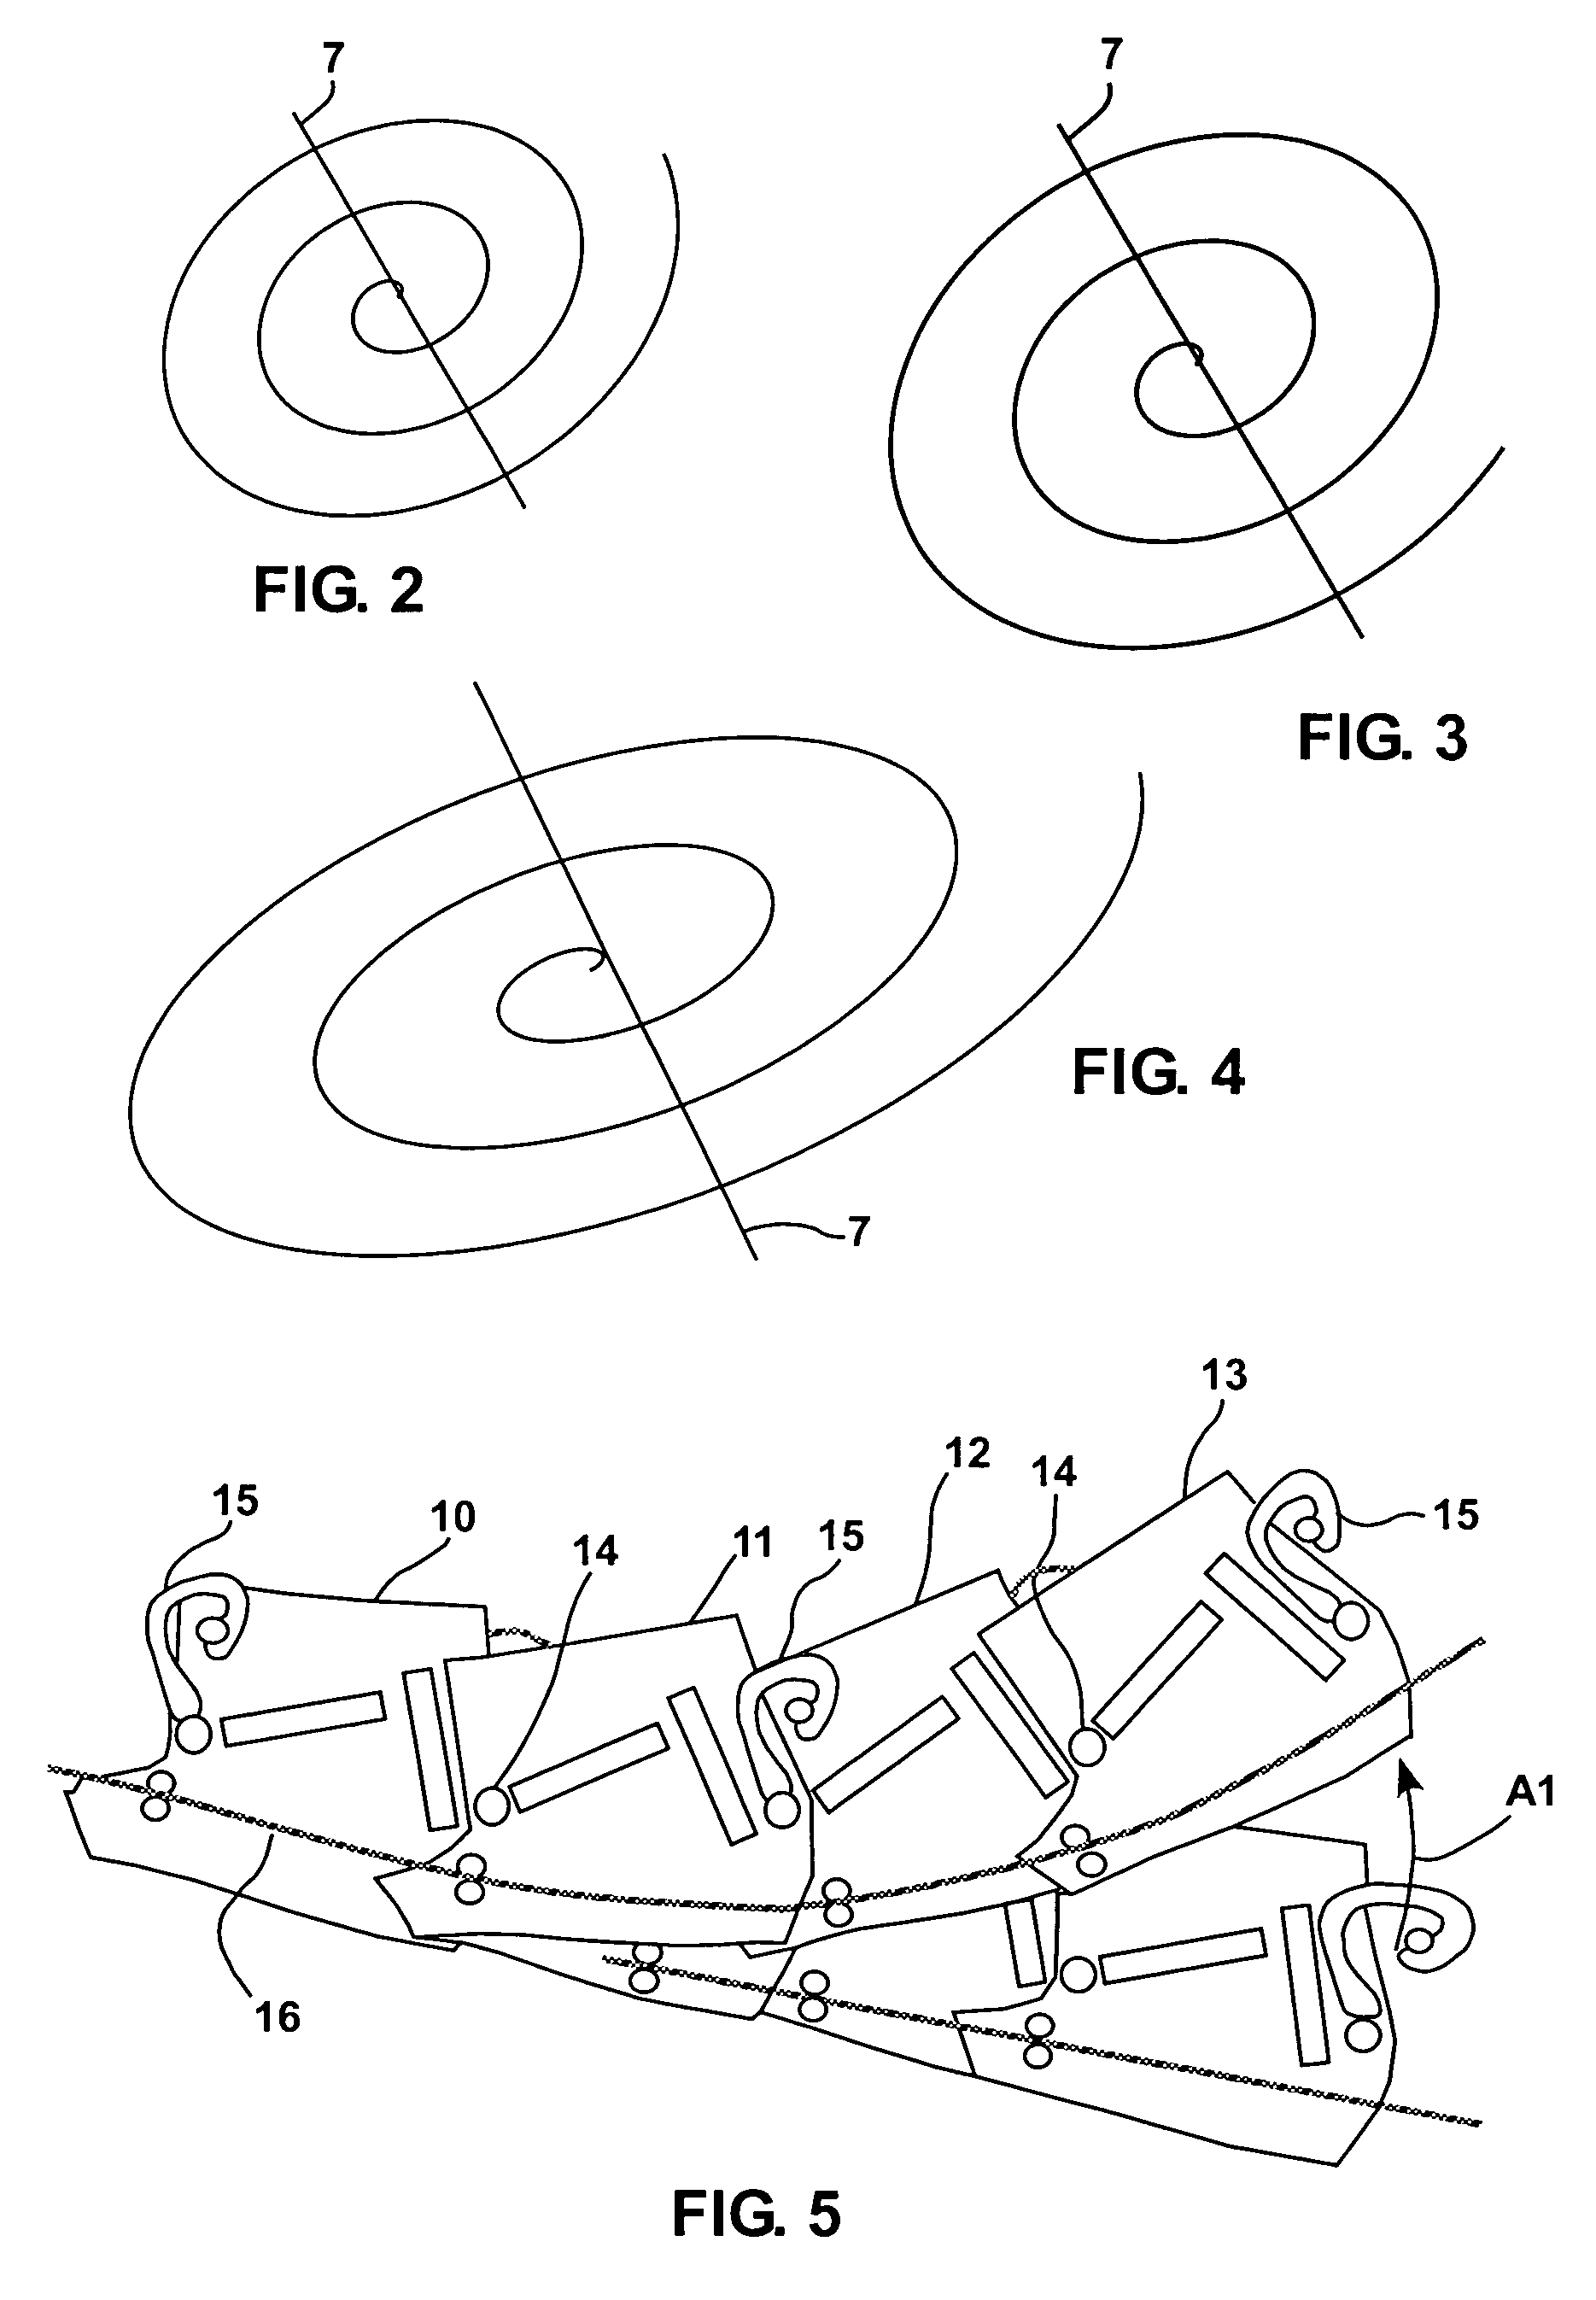 Steerable radial line slot antenna